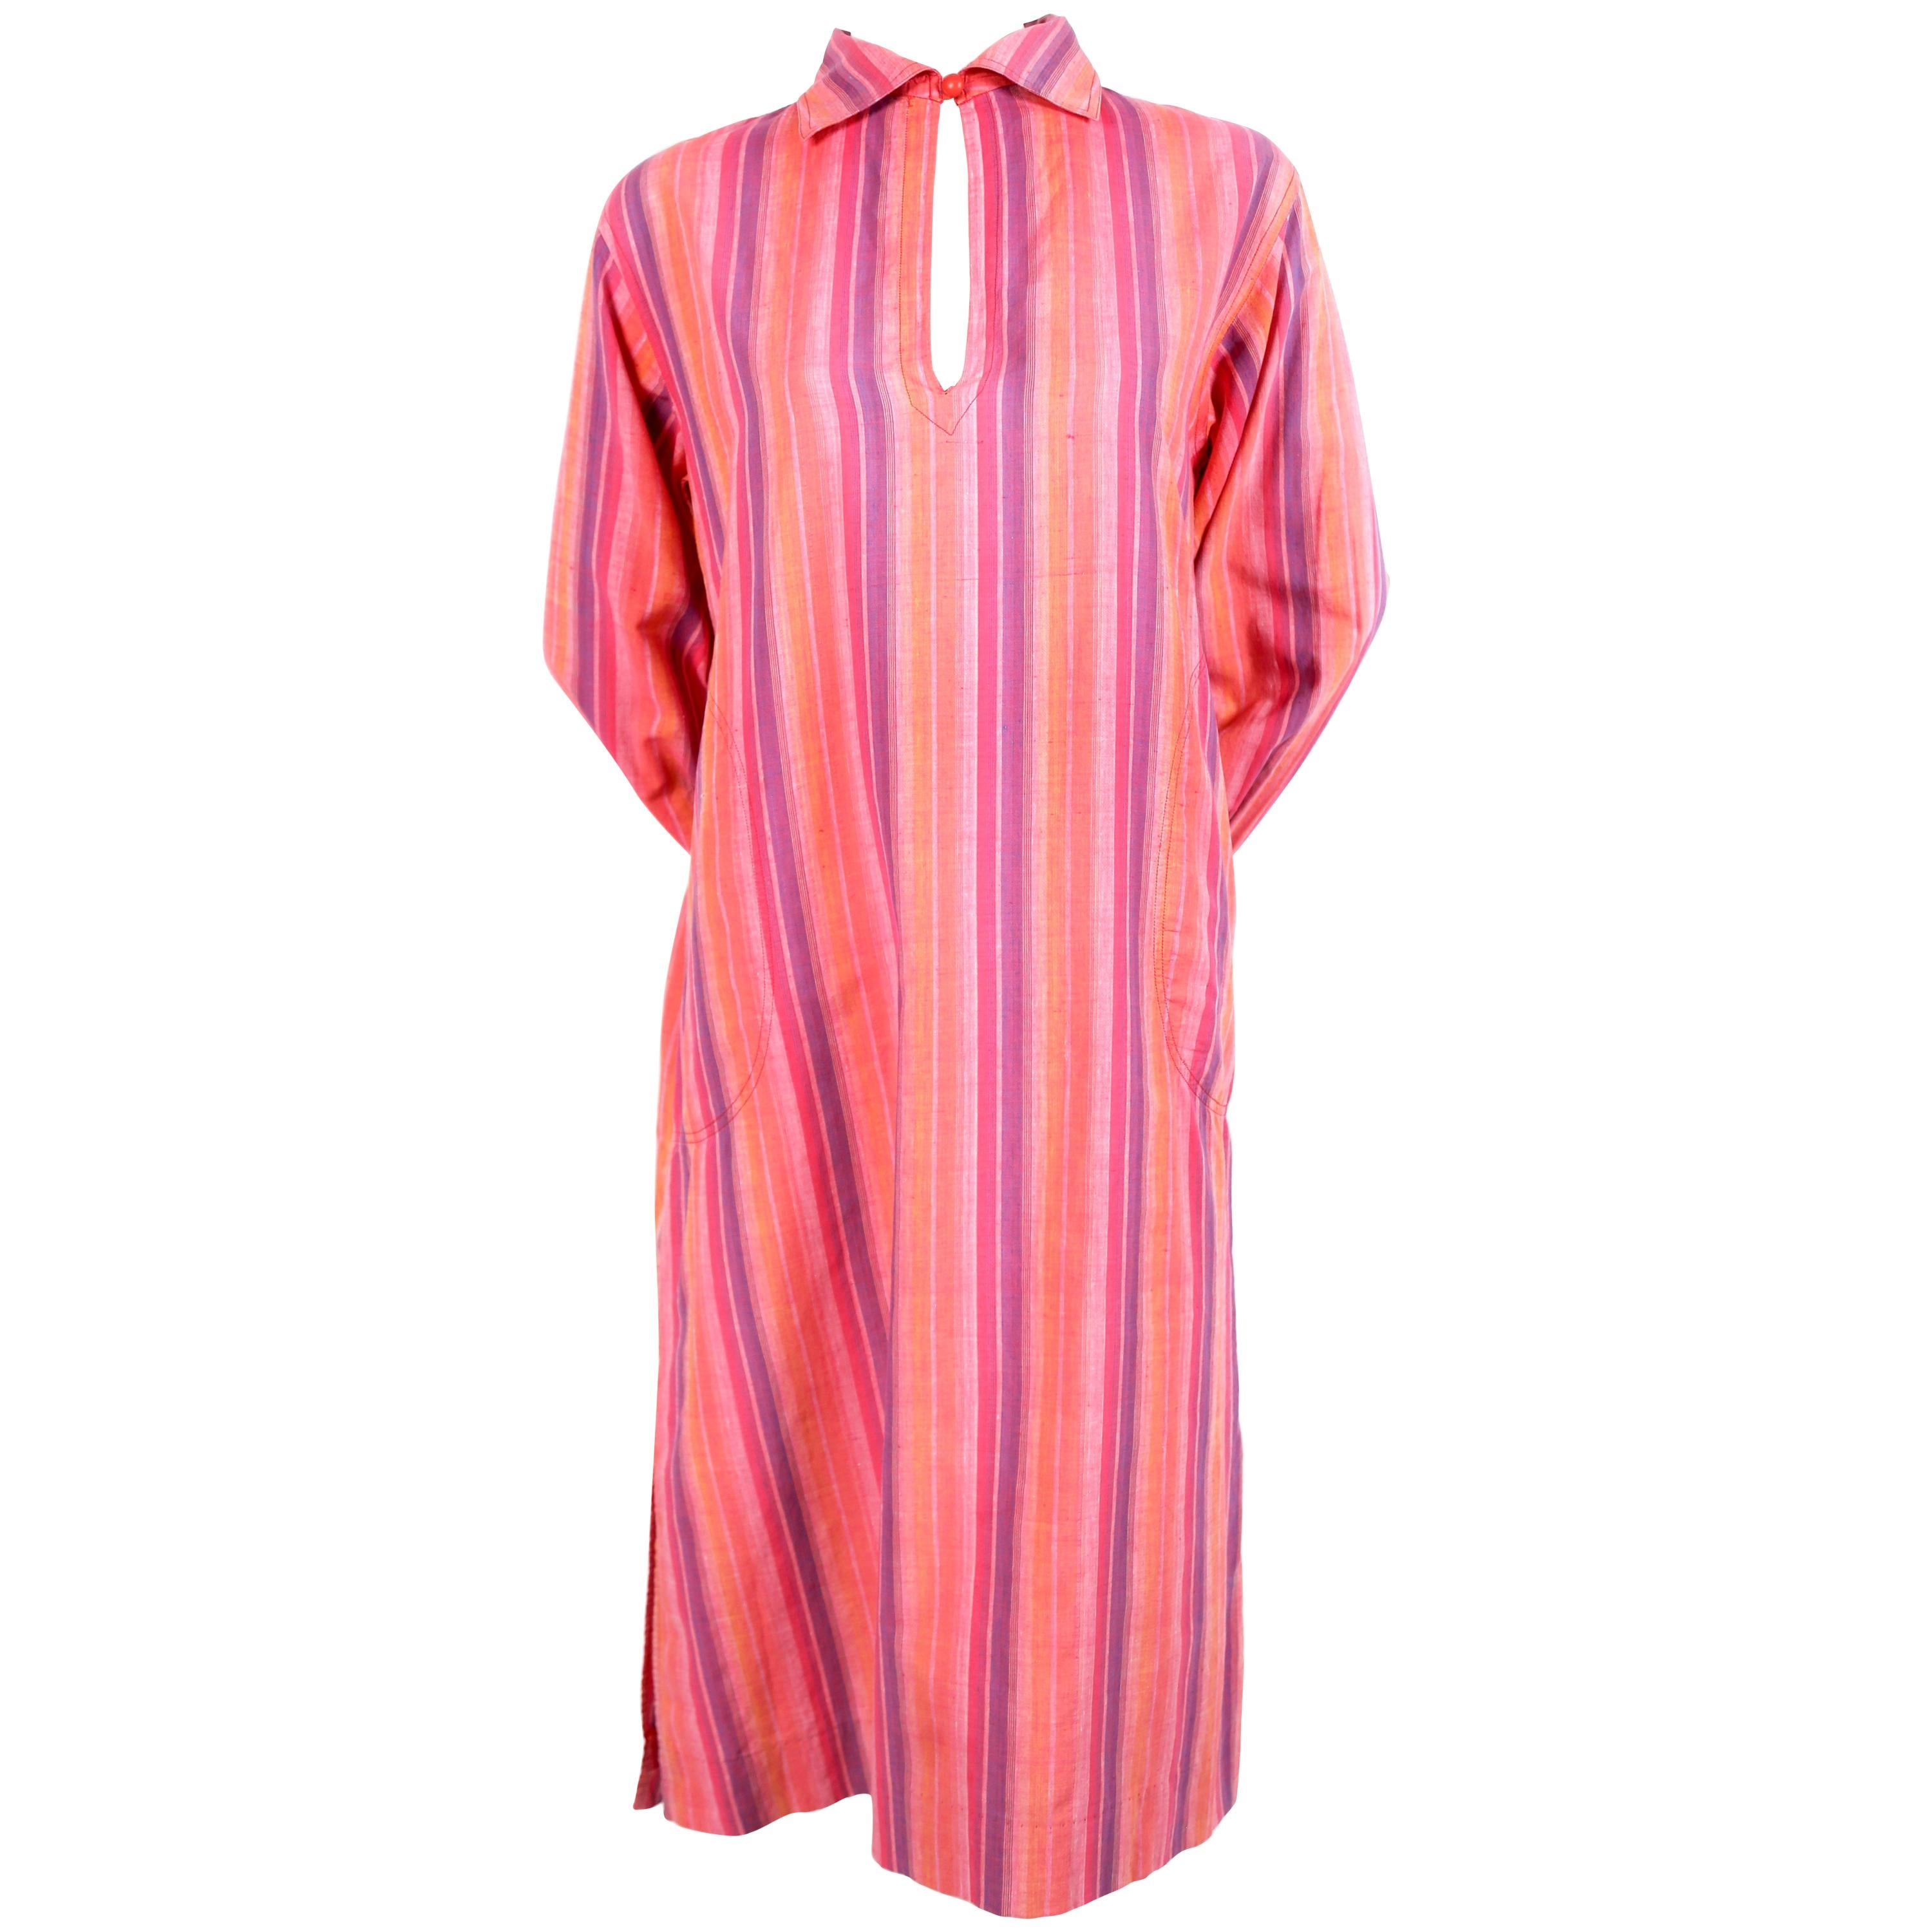 1970's YVES SAINT LAURENT fuchsia striped cotton dress